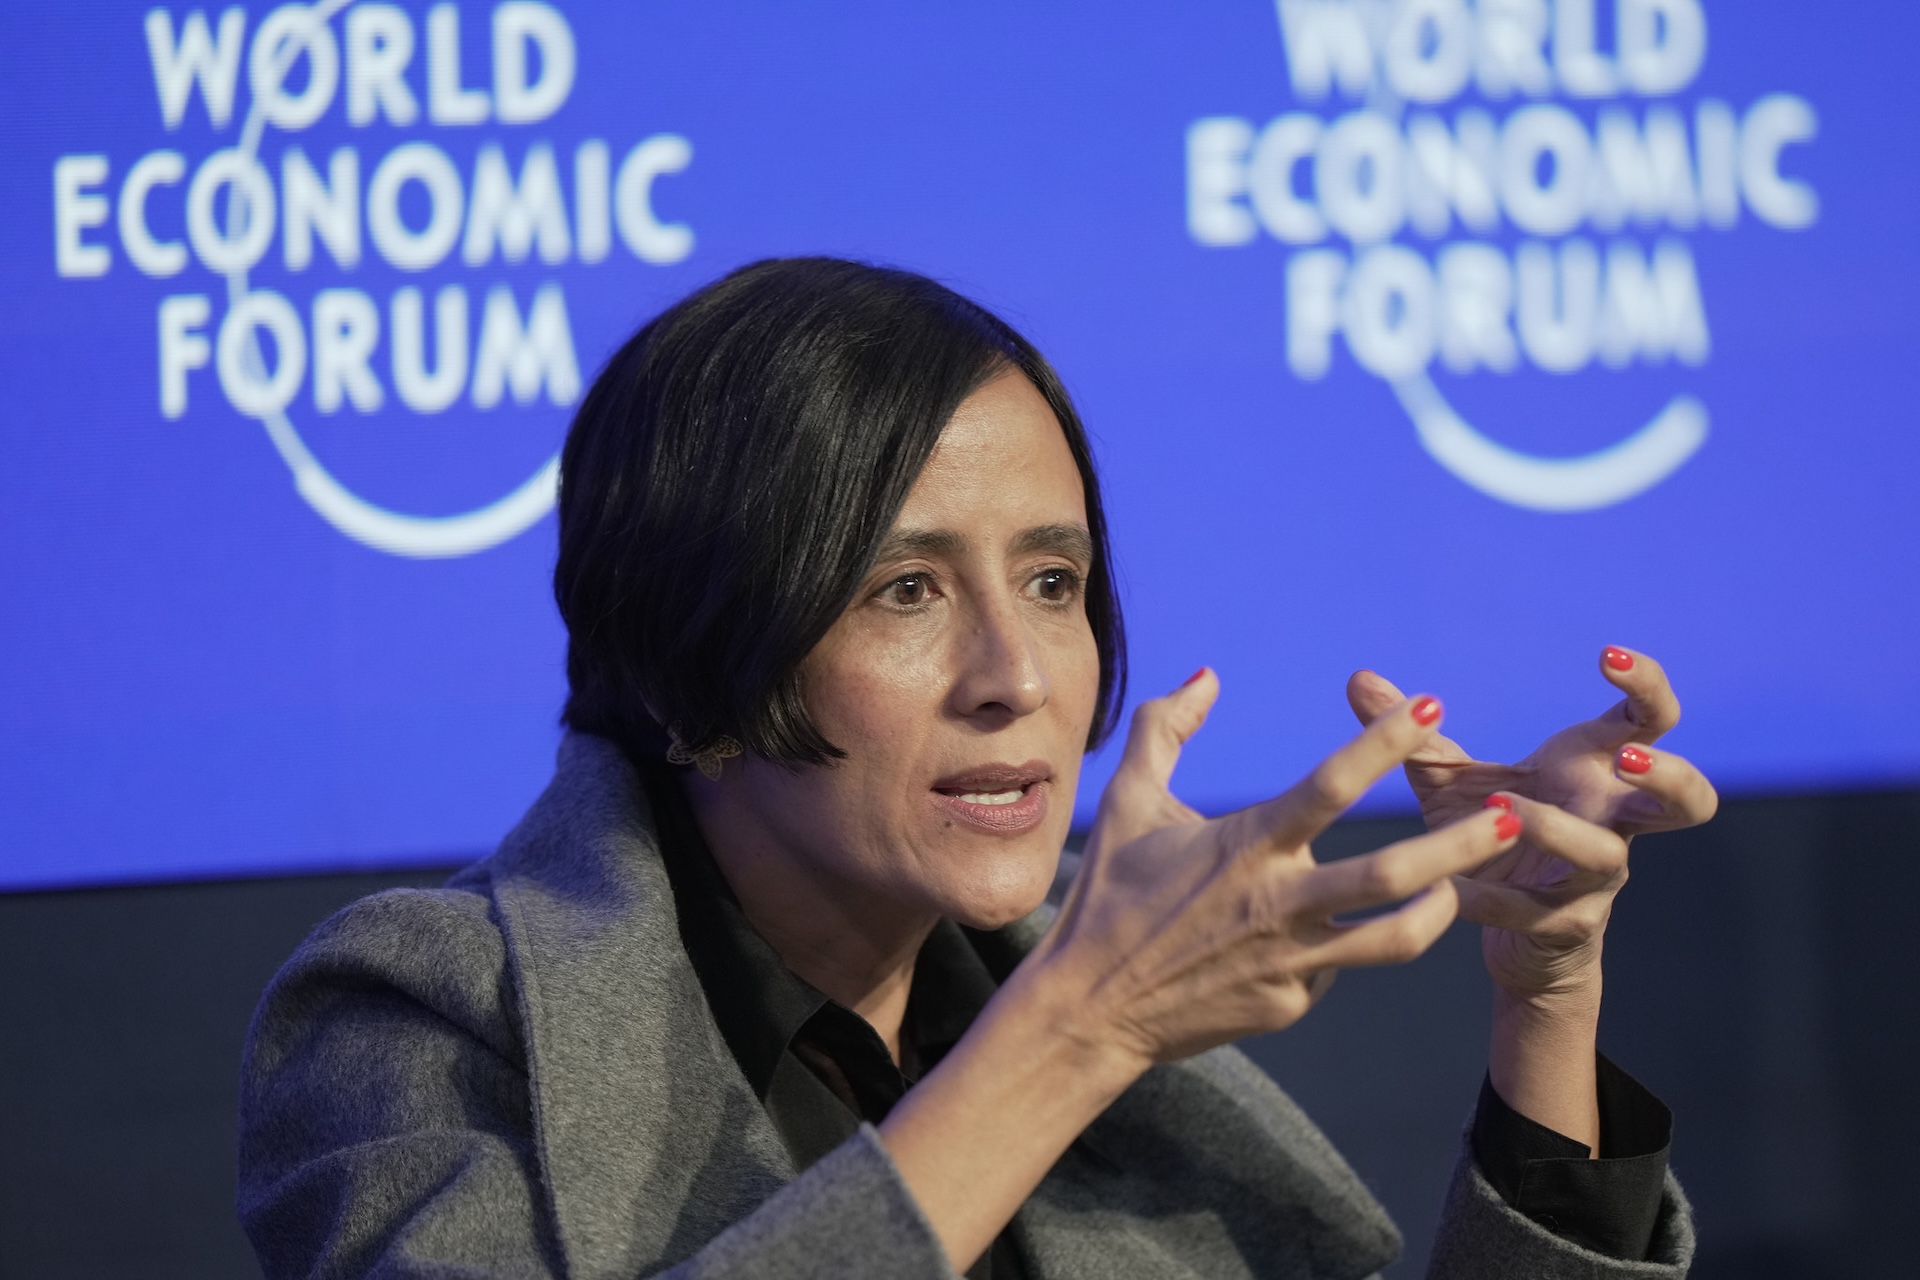 Susana Muhamad cop28 World Economic Forum Flickr